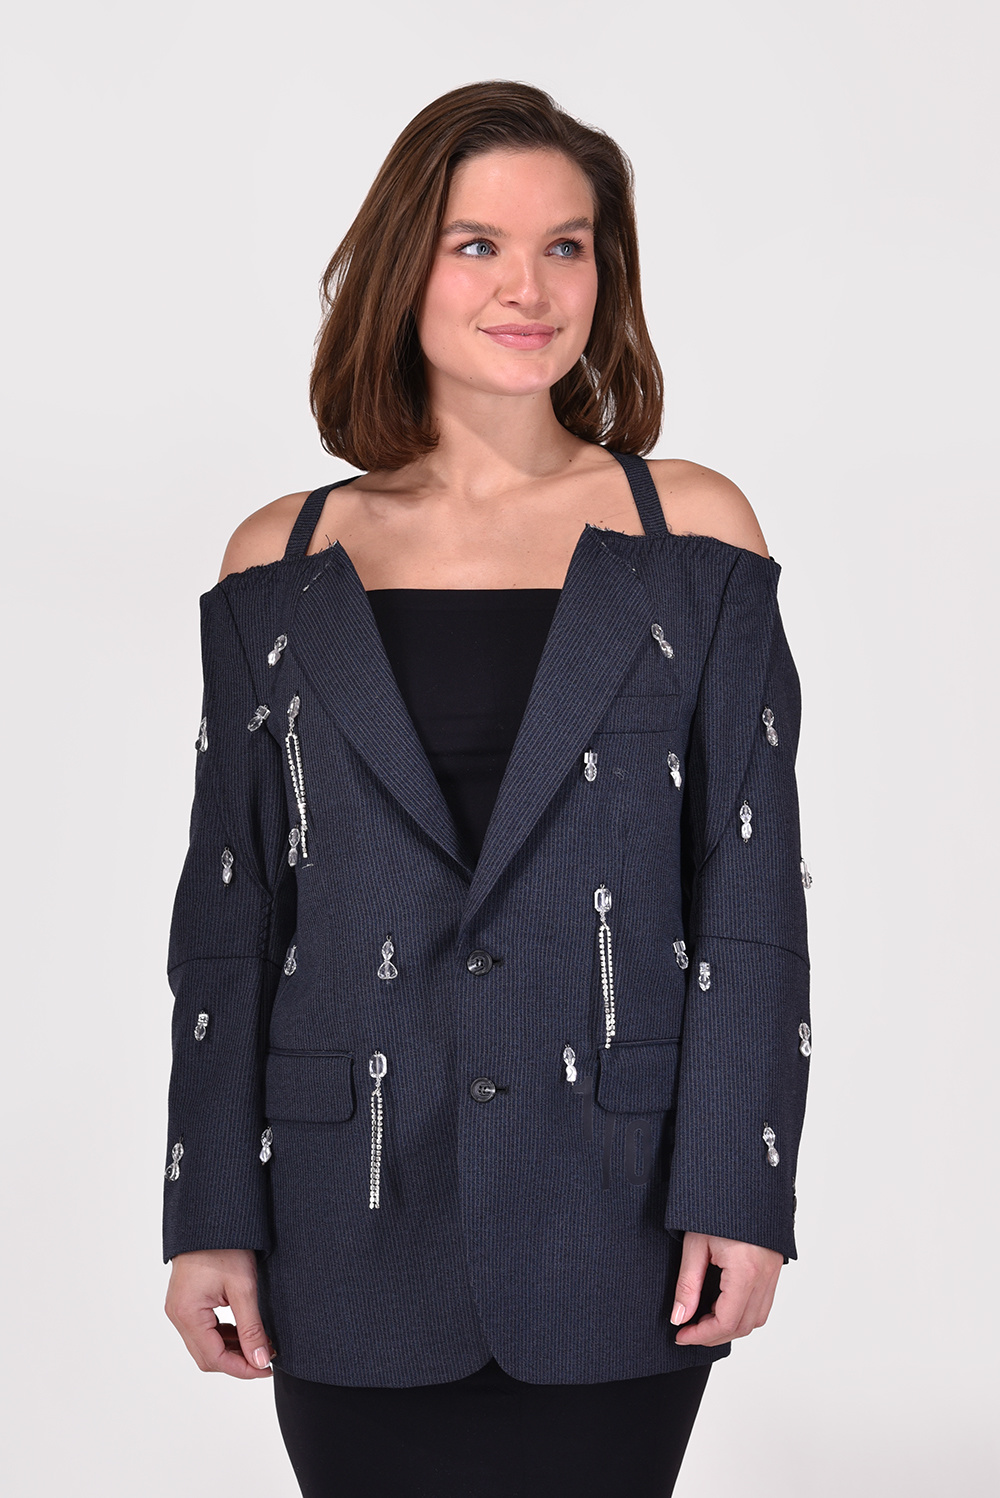 1/OFF Paris jurk Blazer Cut Off Shoulder Stones 23183-3 blauw